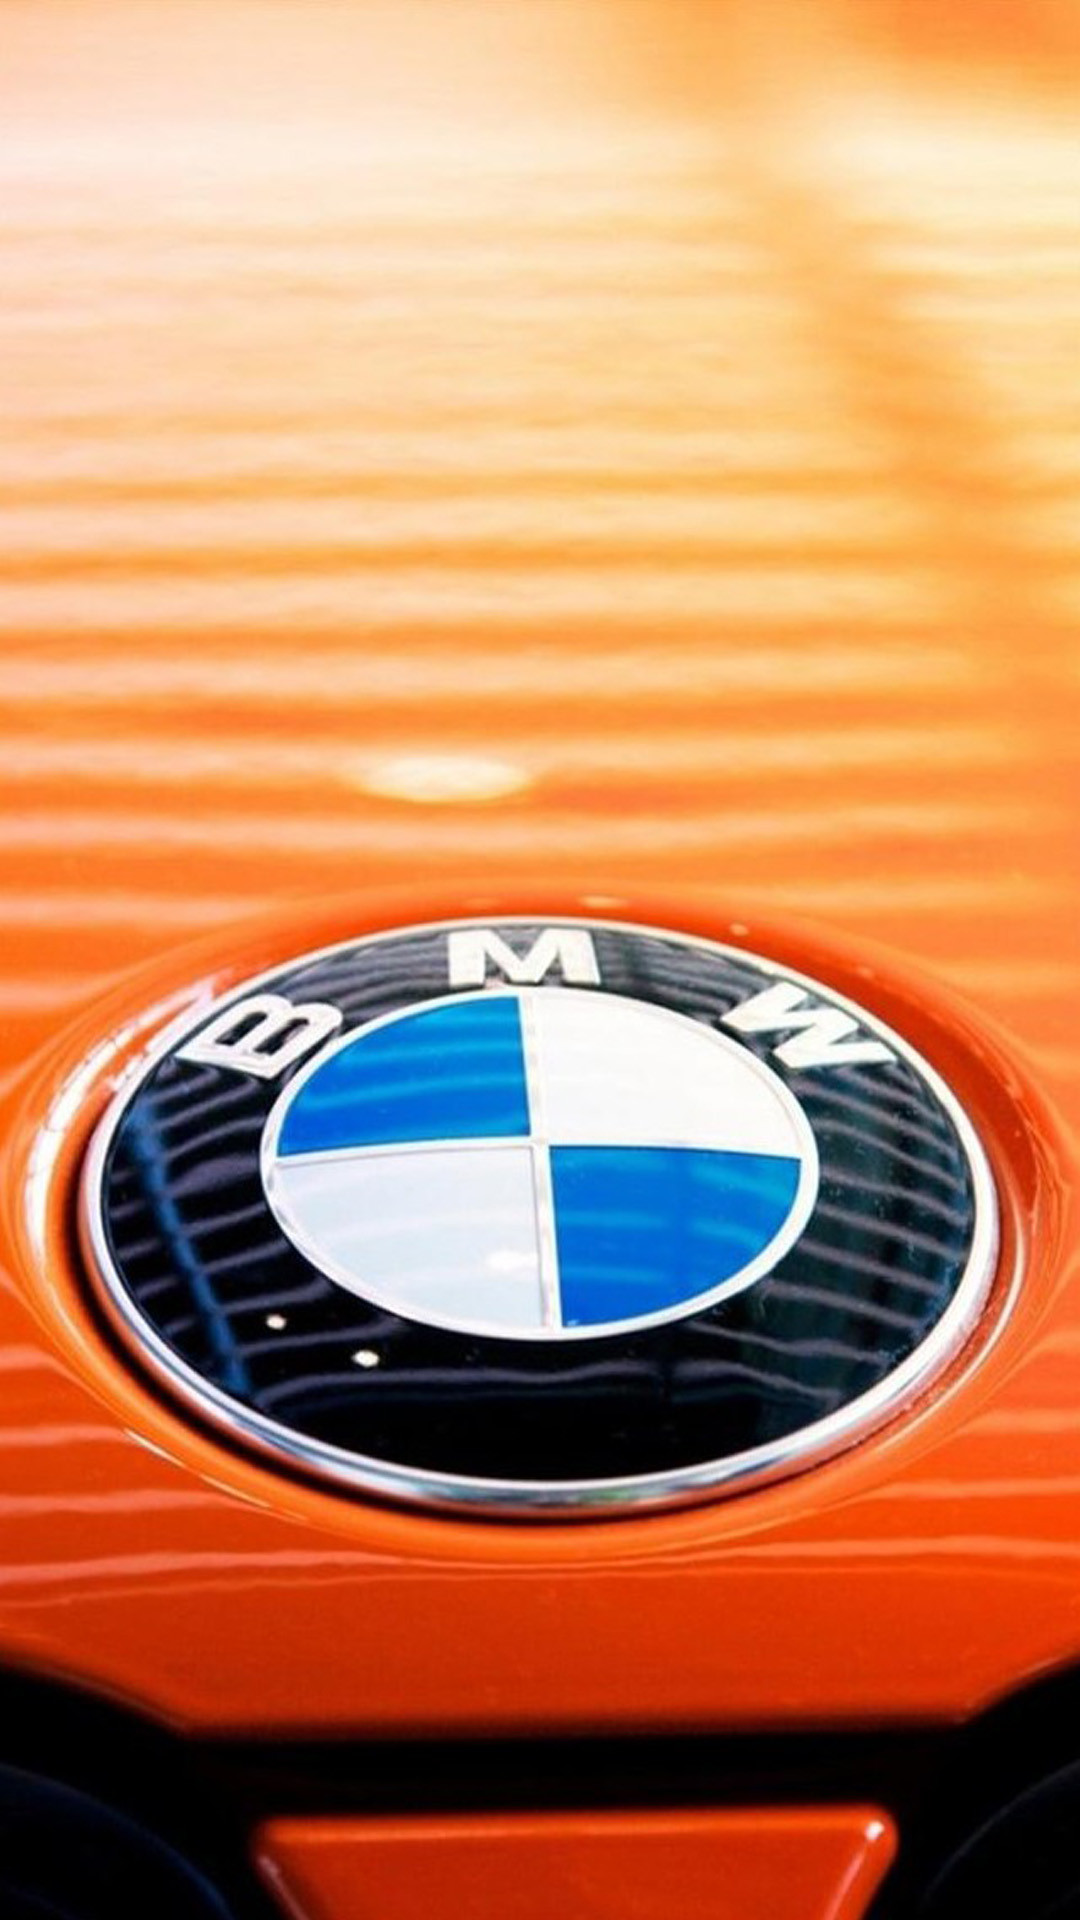 1080x1920 BMW M Logo iPhone Wallpaper | Bimmer | Pinterest | BMW, Cars and .